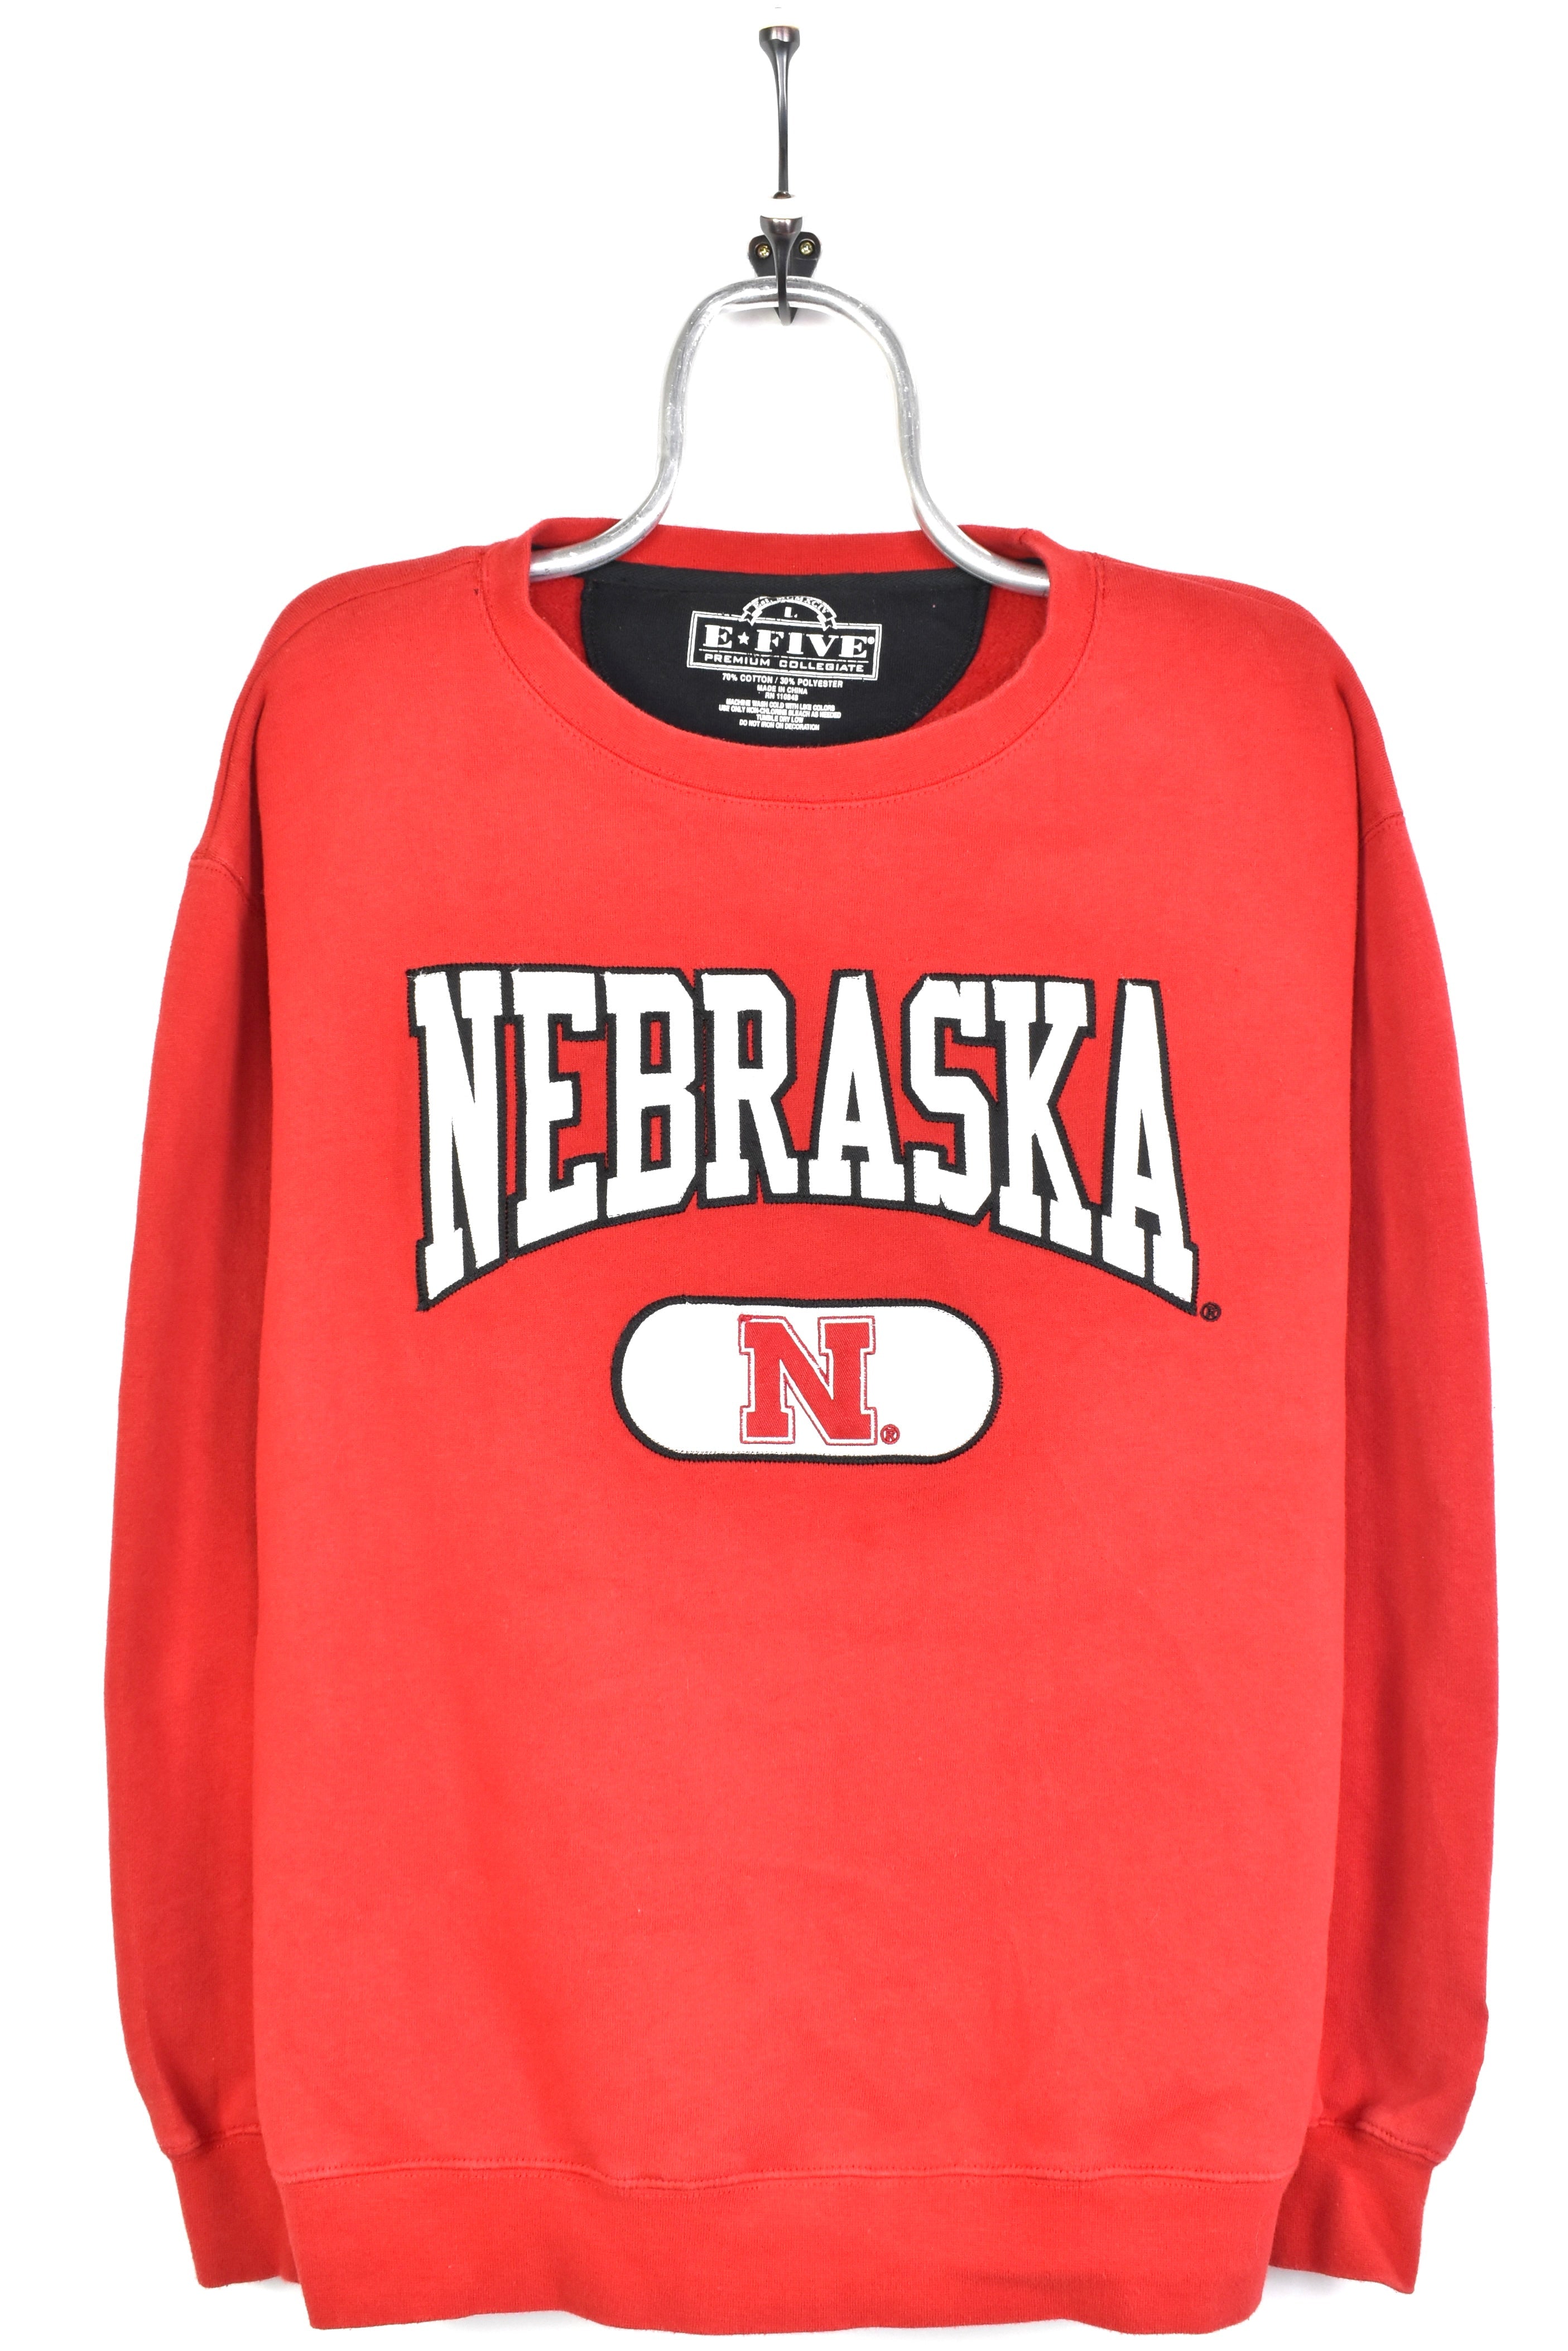 Modern University of Nebraska sweatshirt, red embroidered crewneck - AU Large COLLEGE